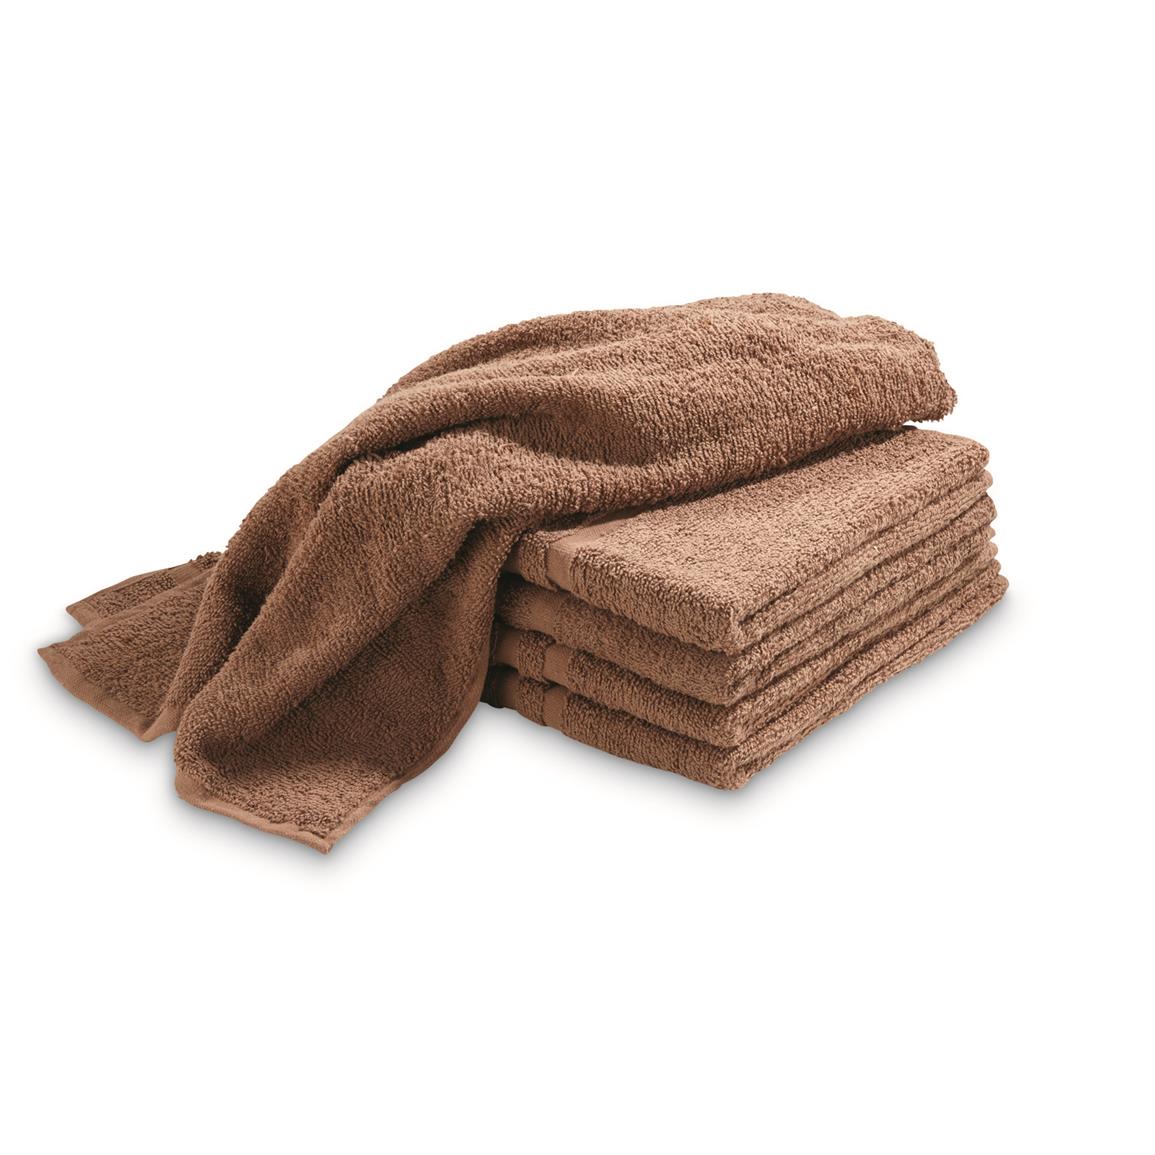 US Military Surplus Bath Towels, 5 Pack, New